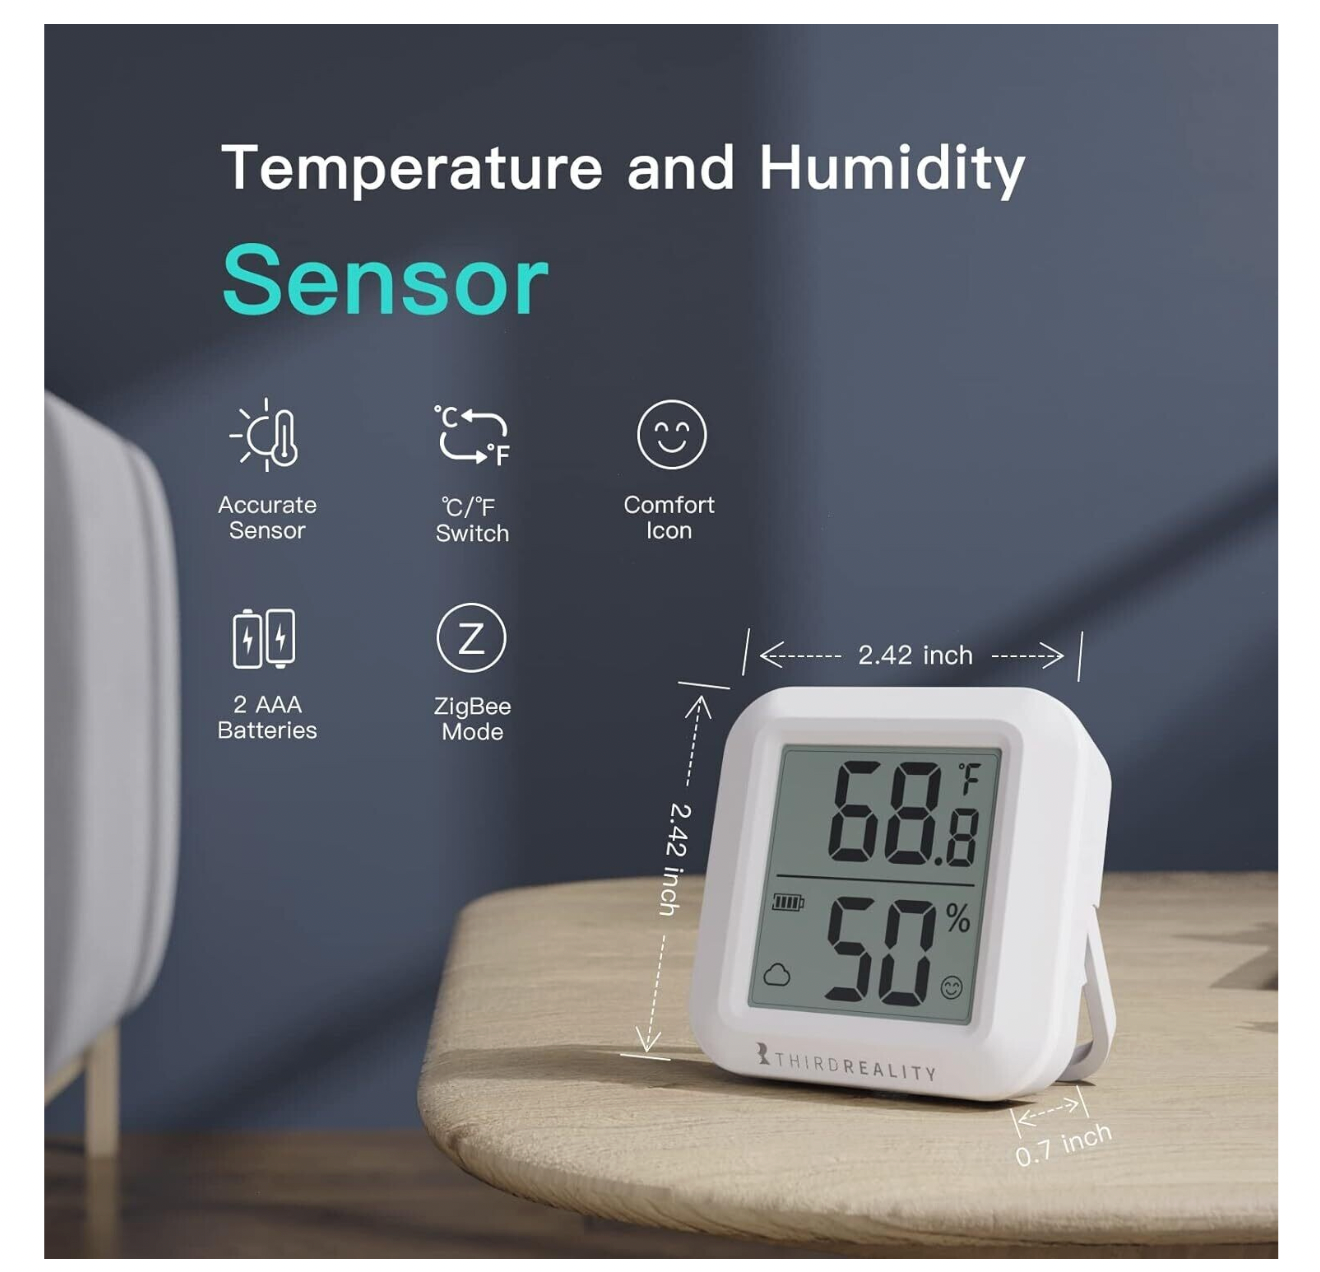 Temperature and Humidity Sensor with Digital LCD Display